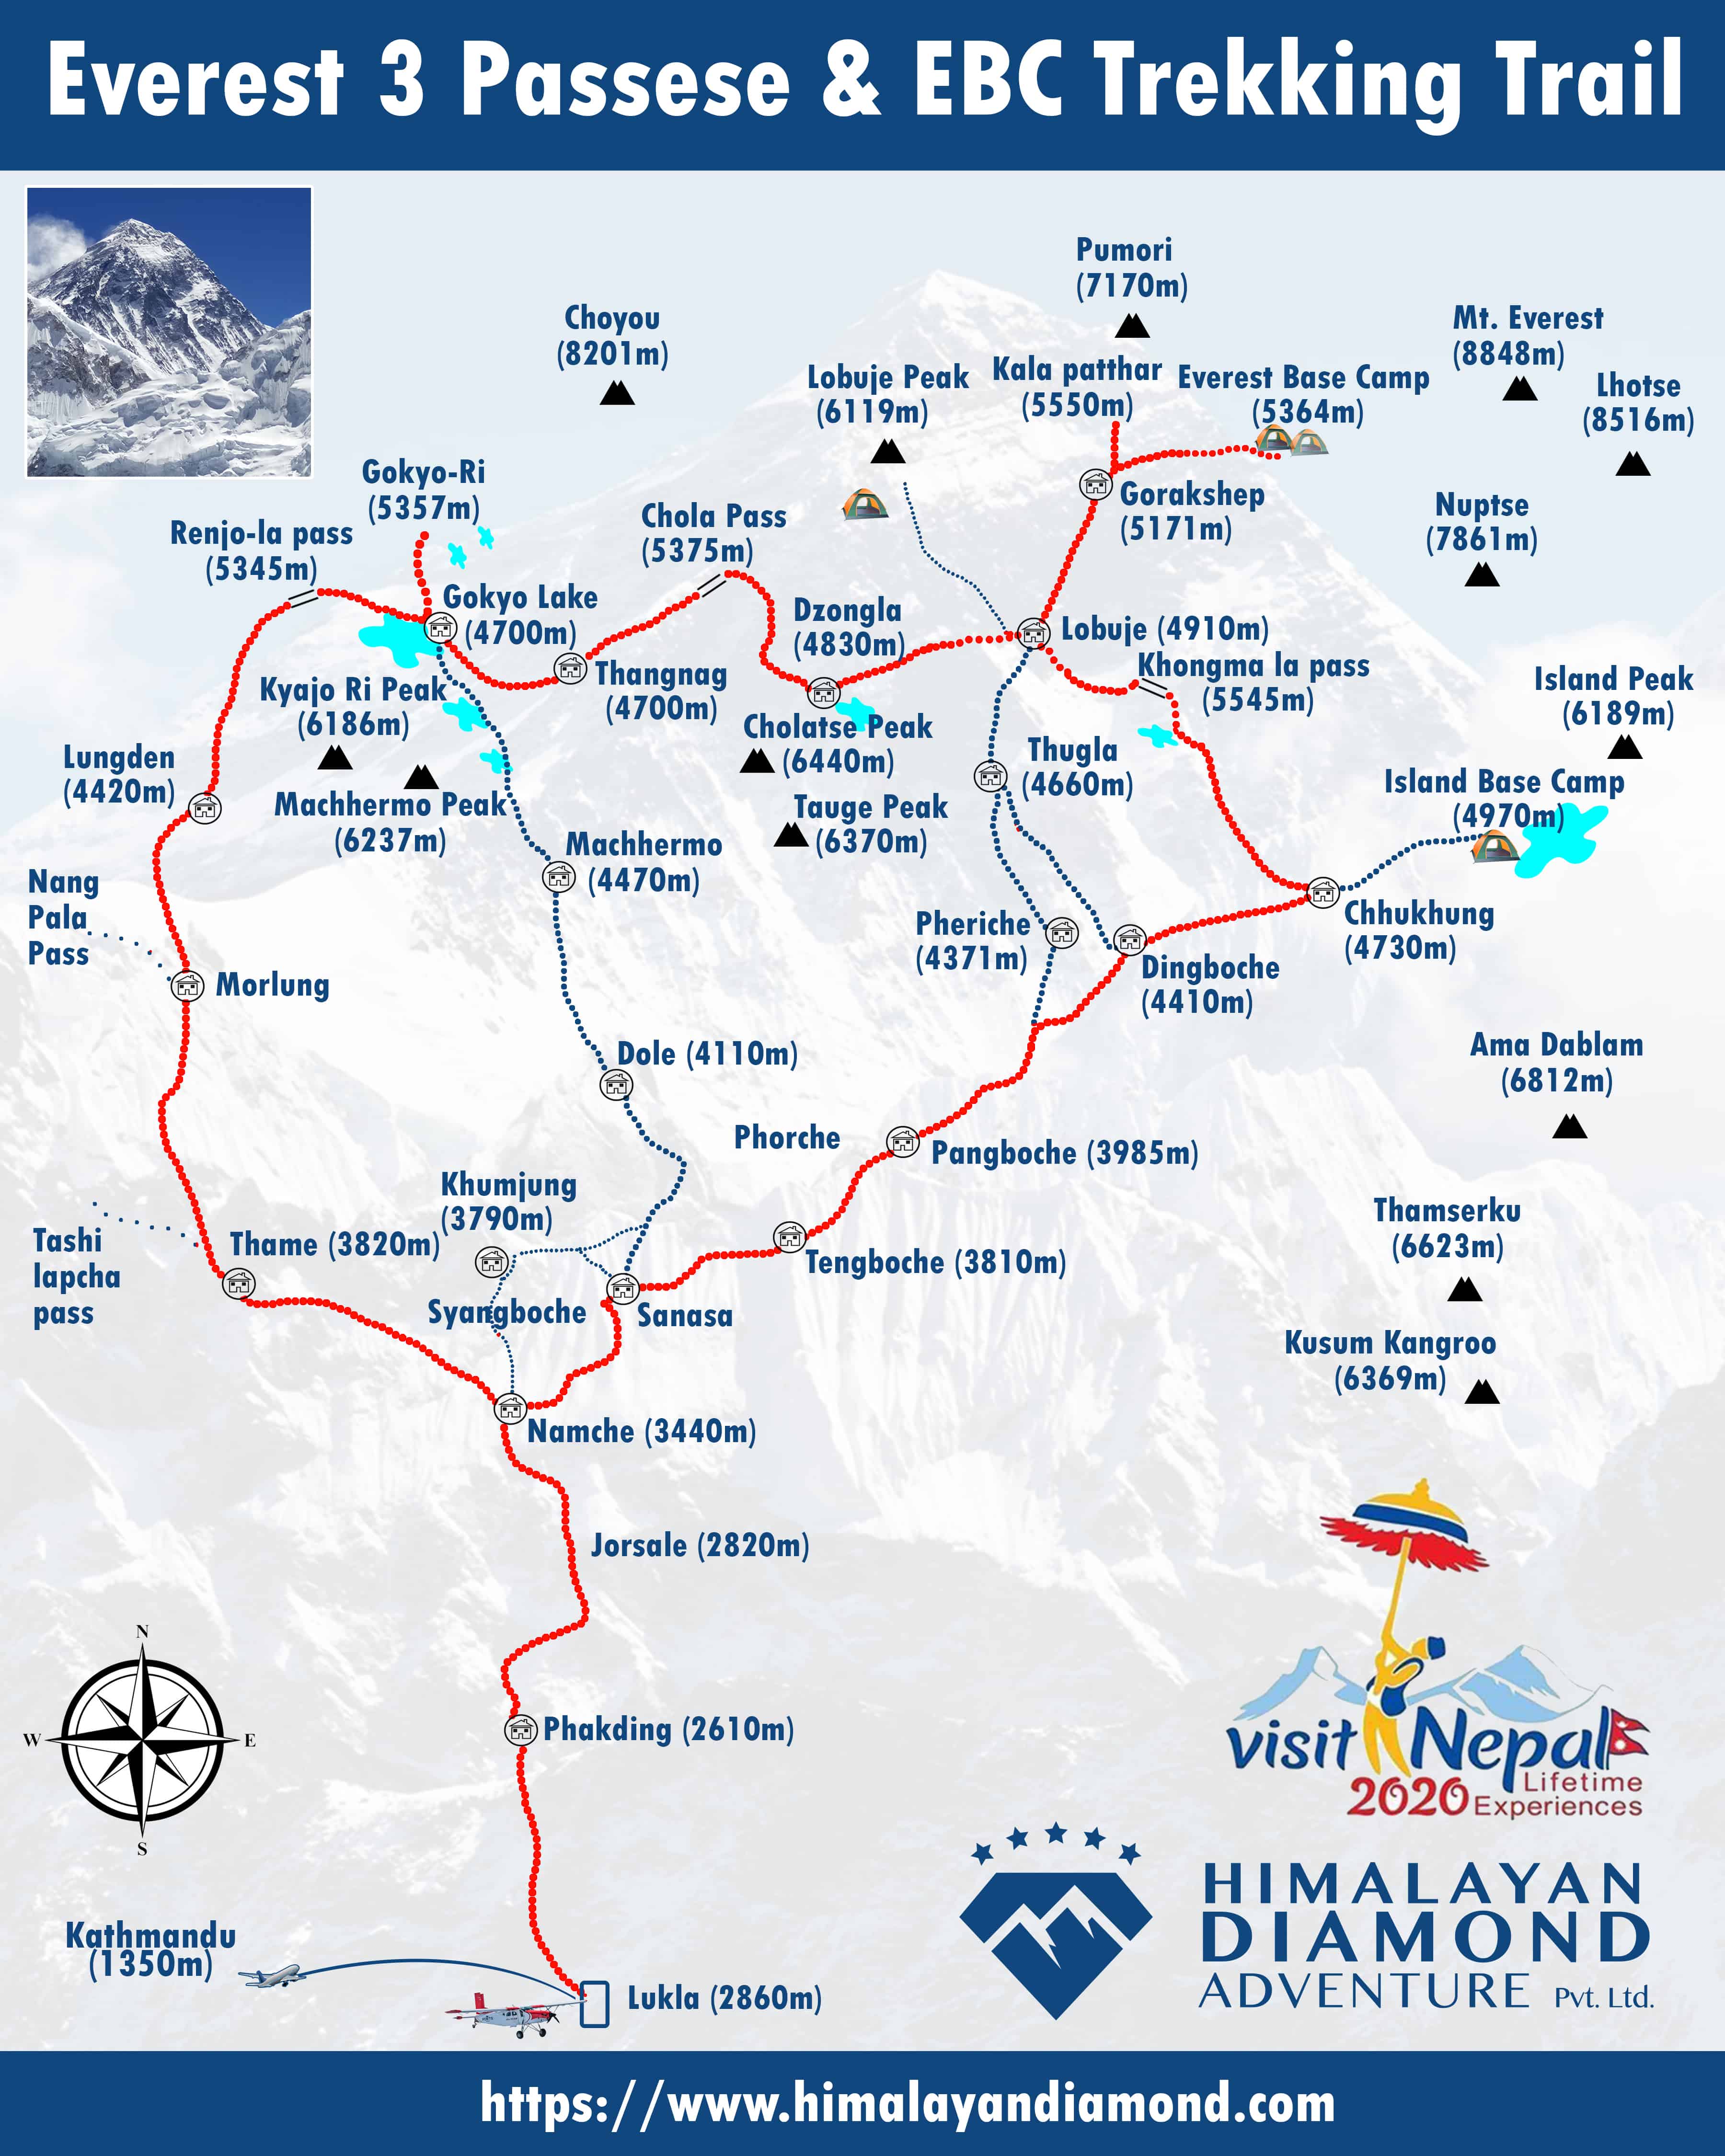 Everest Three Passes Trek Map